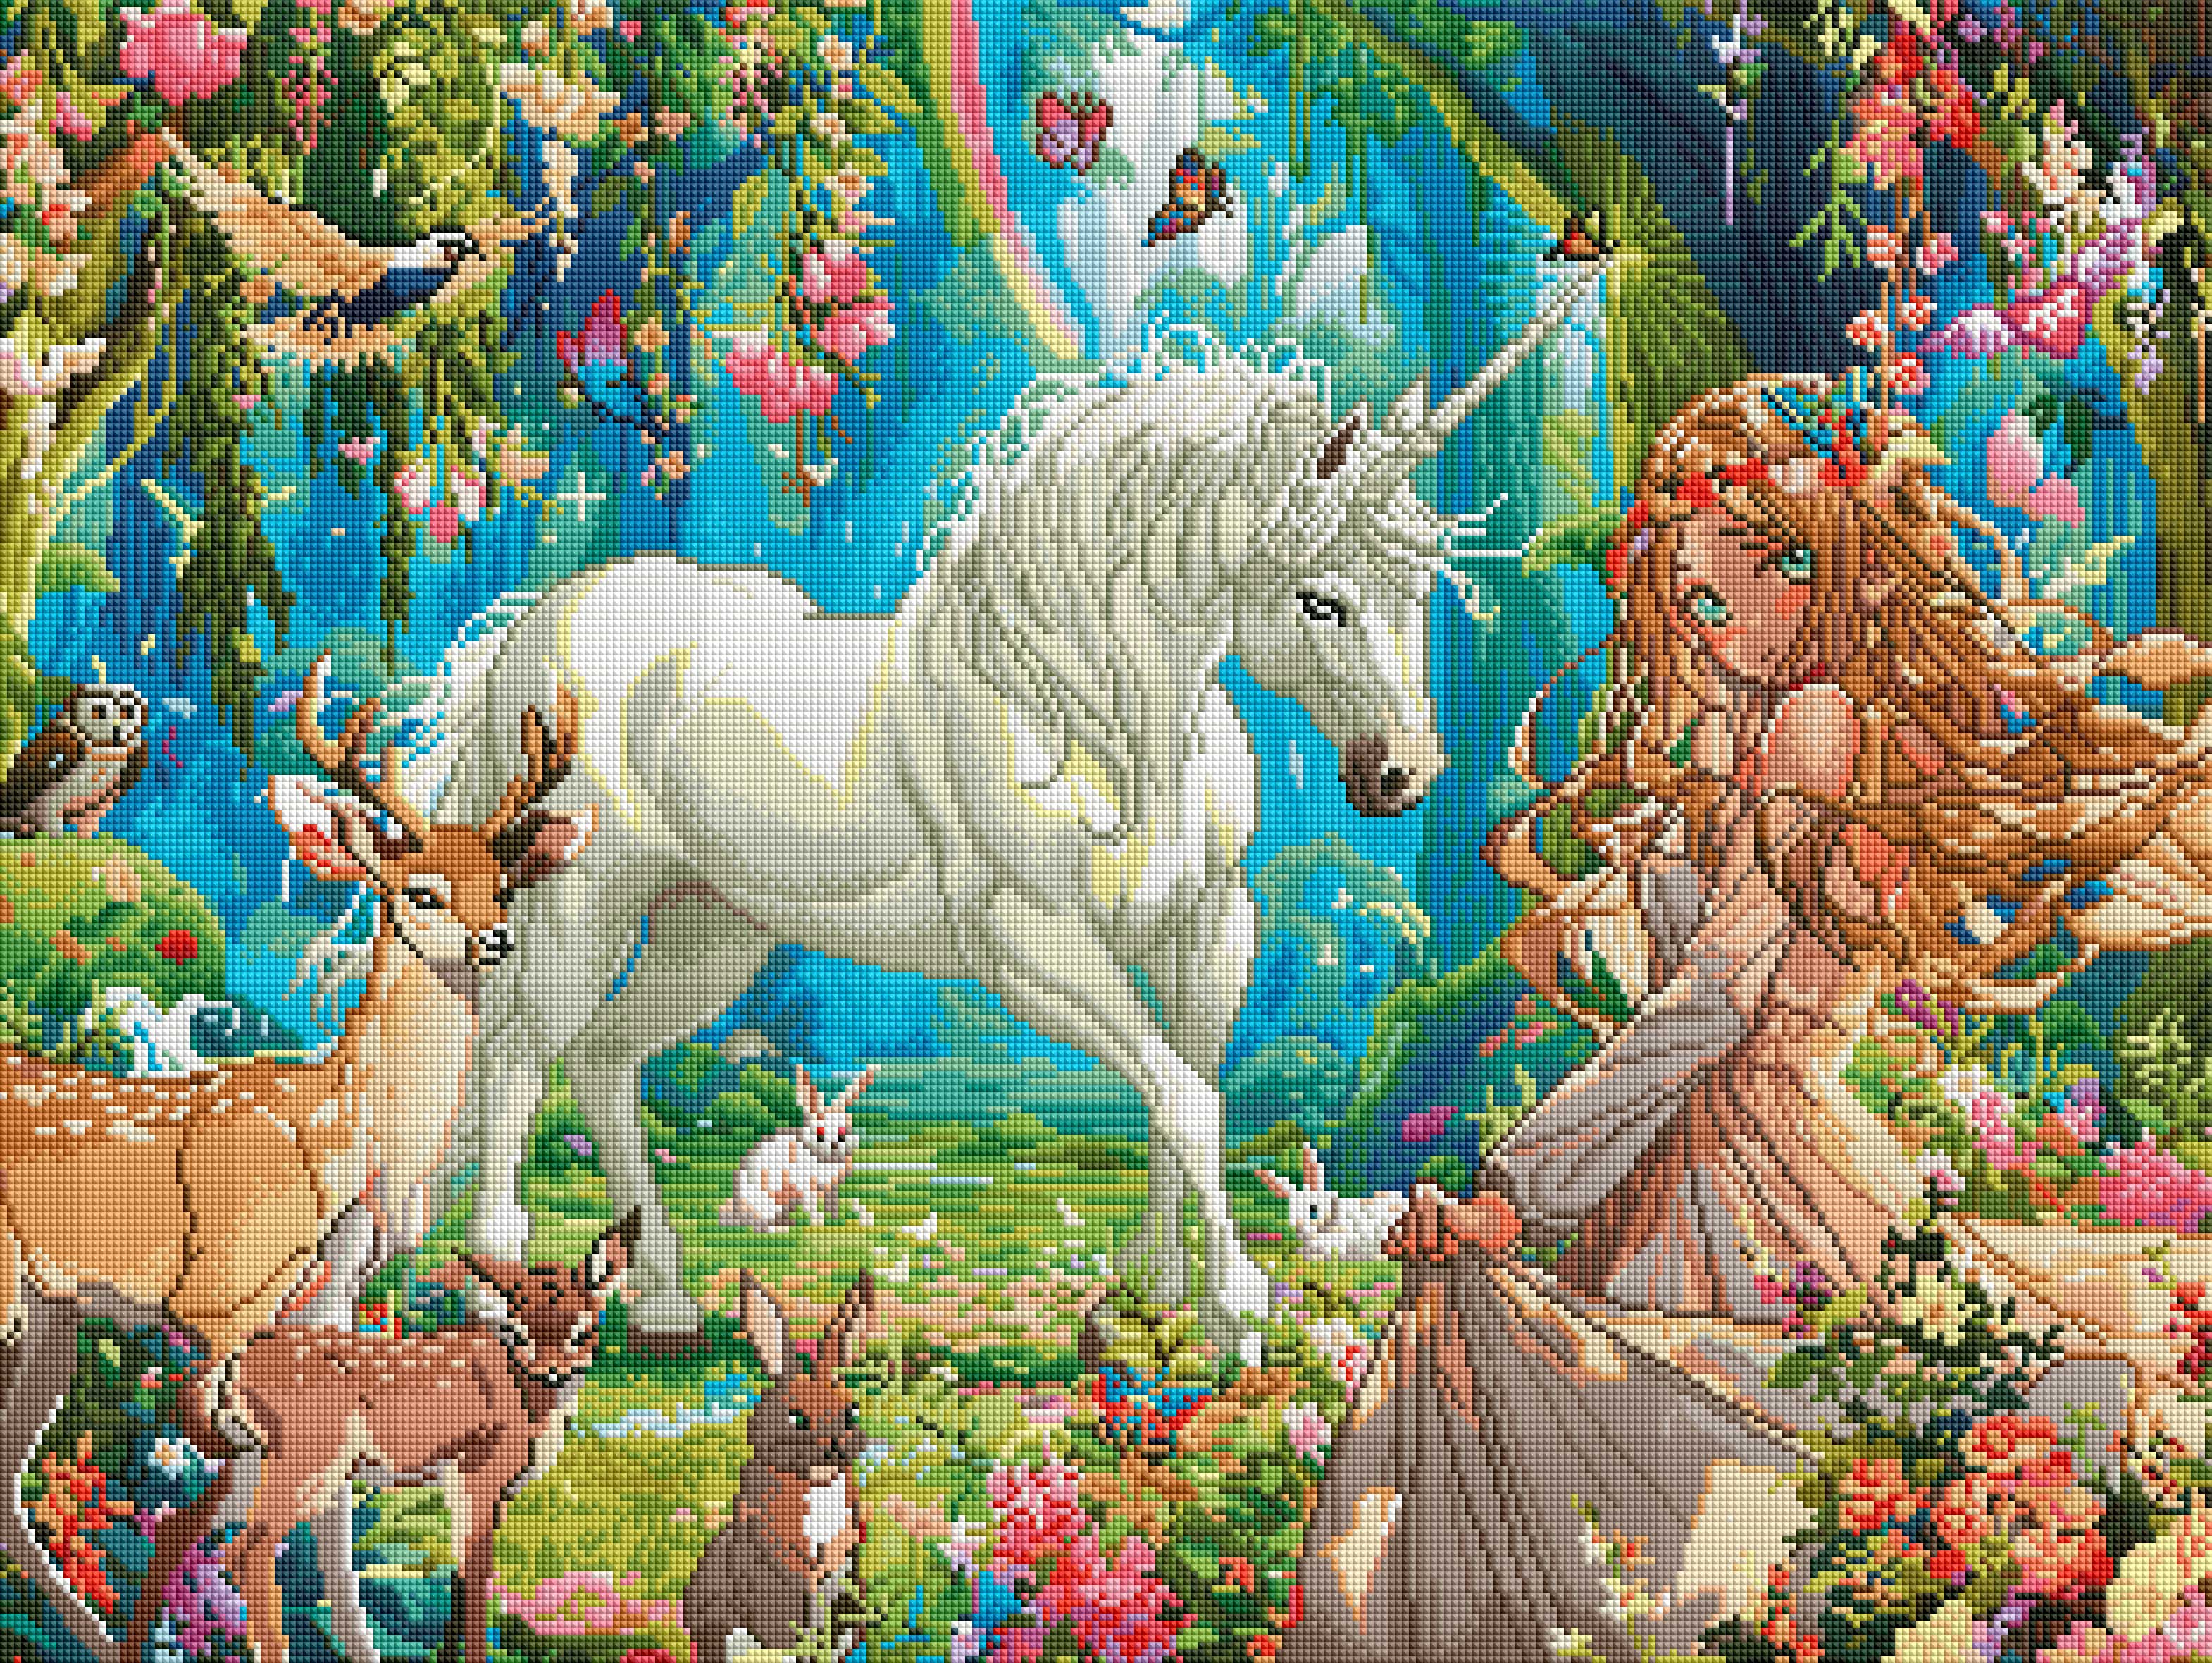 Fairy and Unicorn